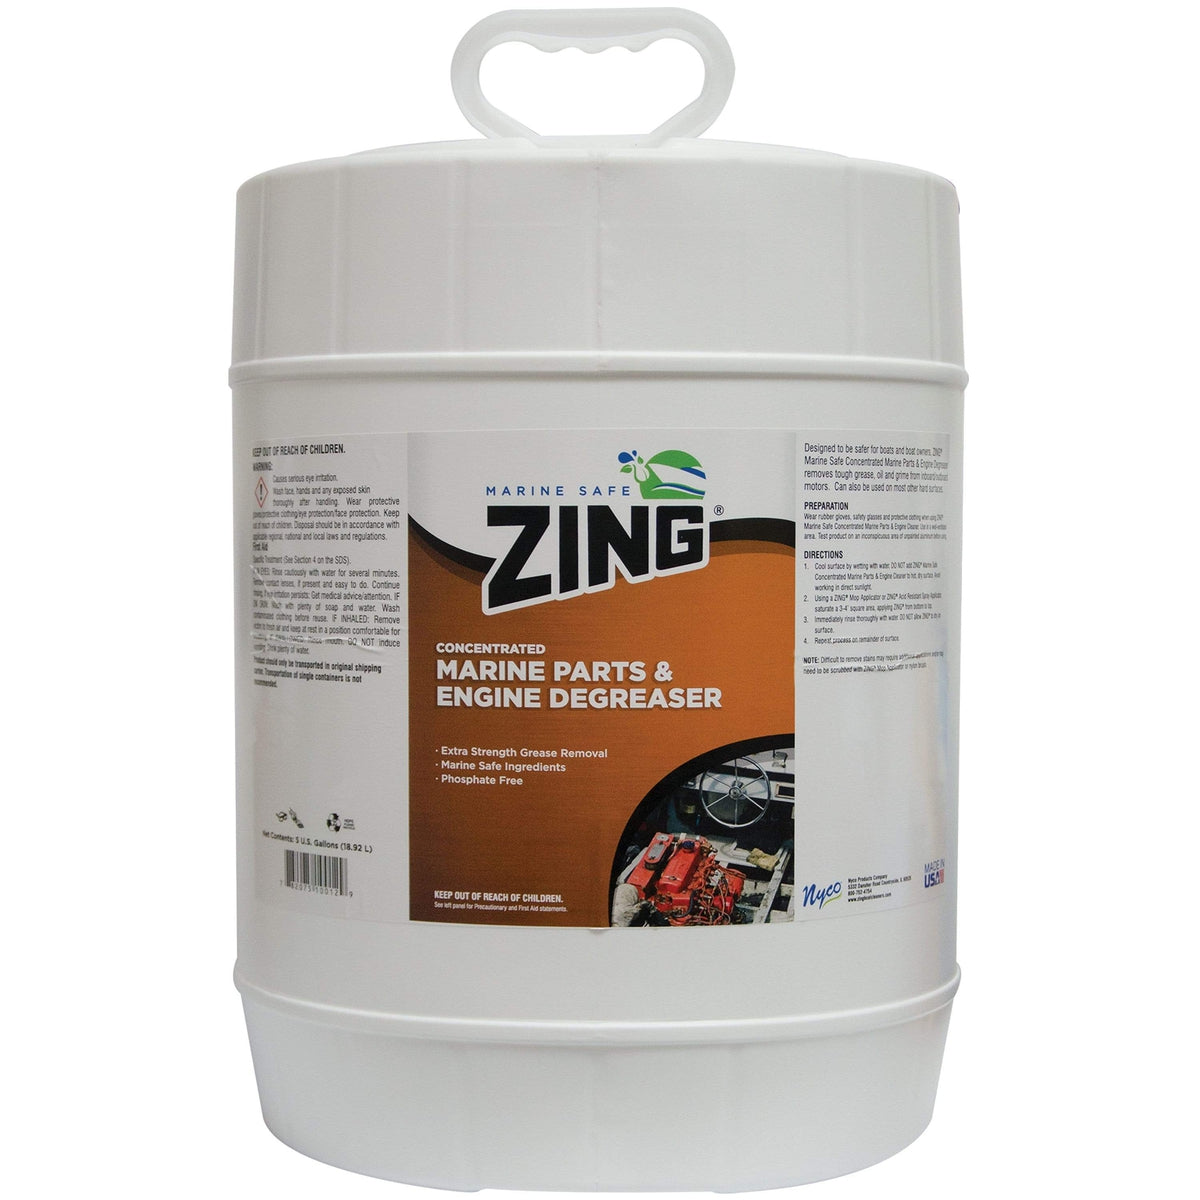 Zing Marine-Safe Marine Parts/Engine Degreaser 5-Gallon #10502